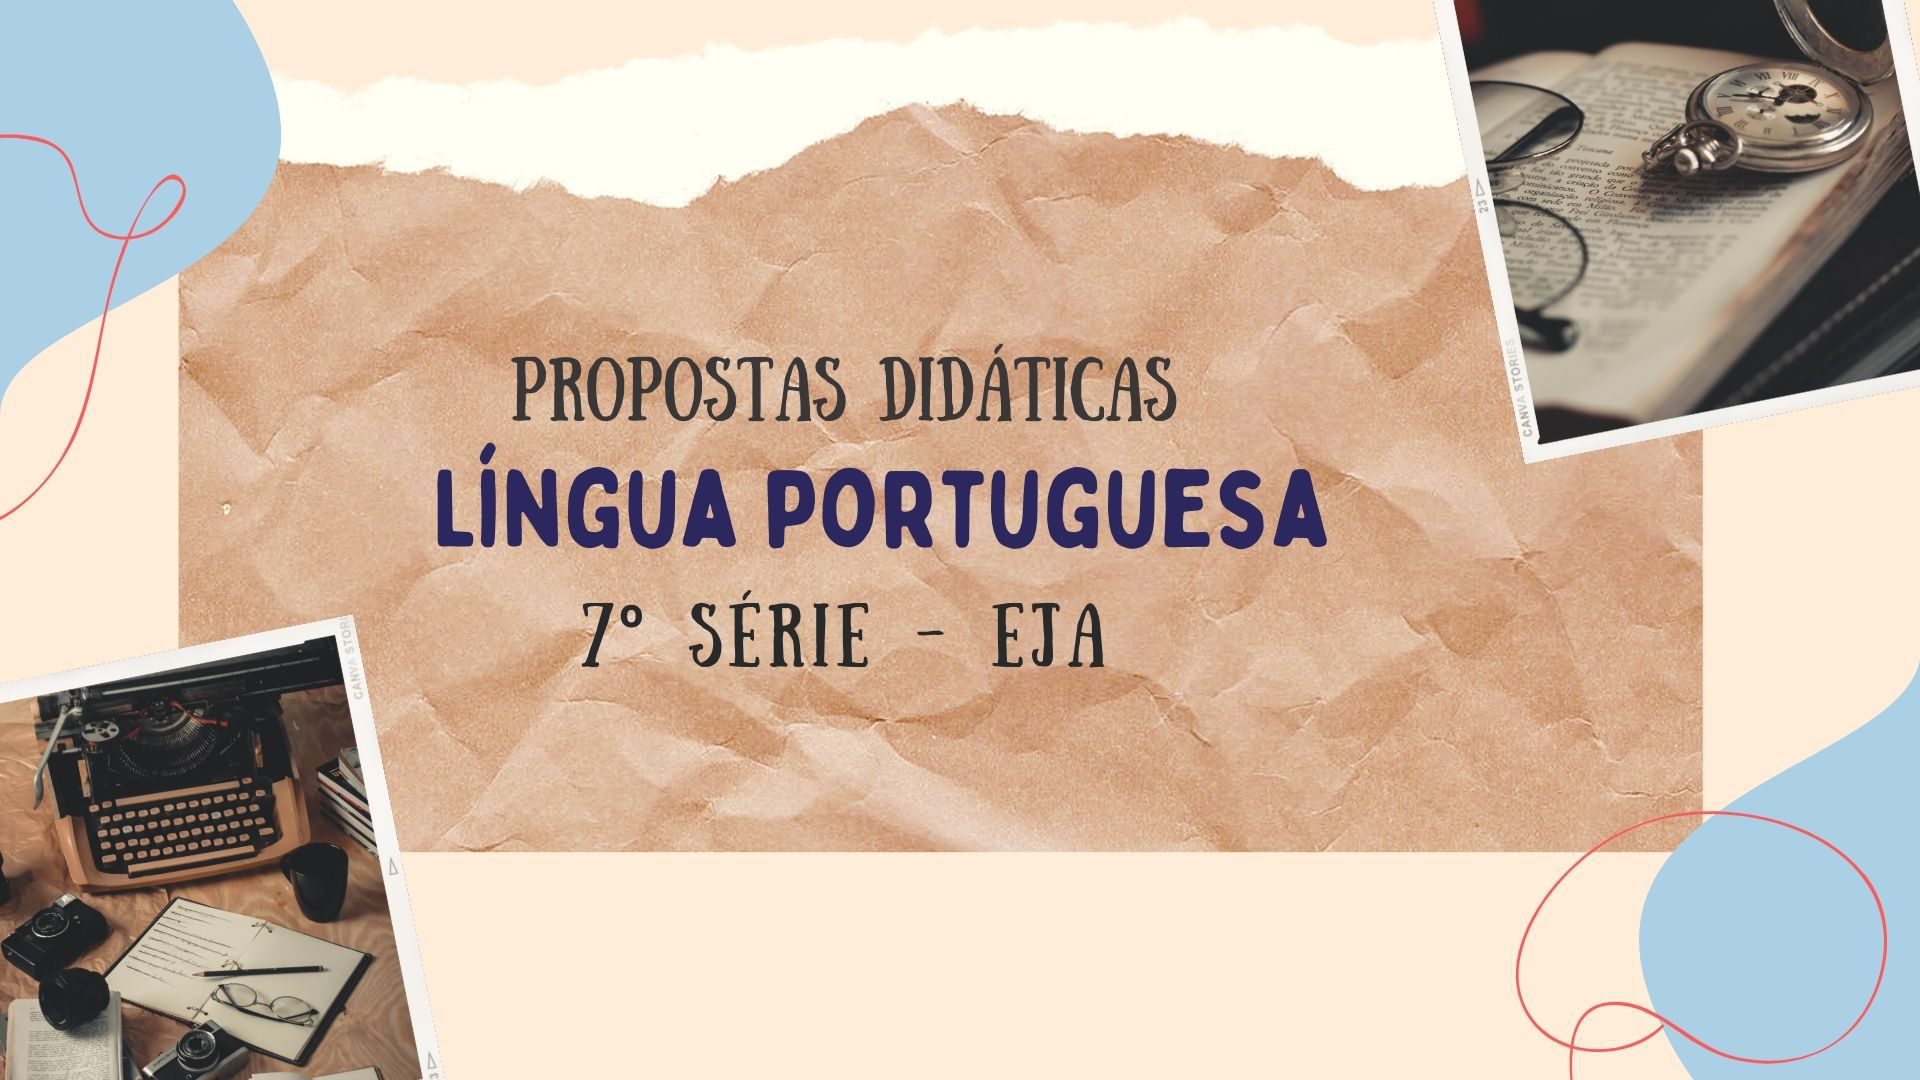 You are currently viewing Propostas didáticas – Língua Portuguesa EJA – 7ª série.